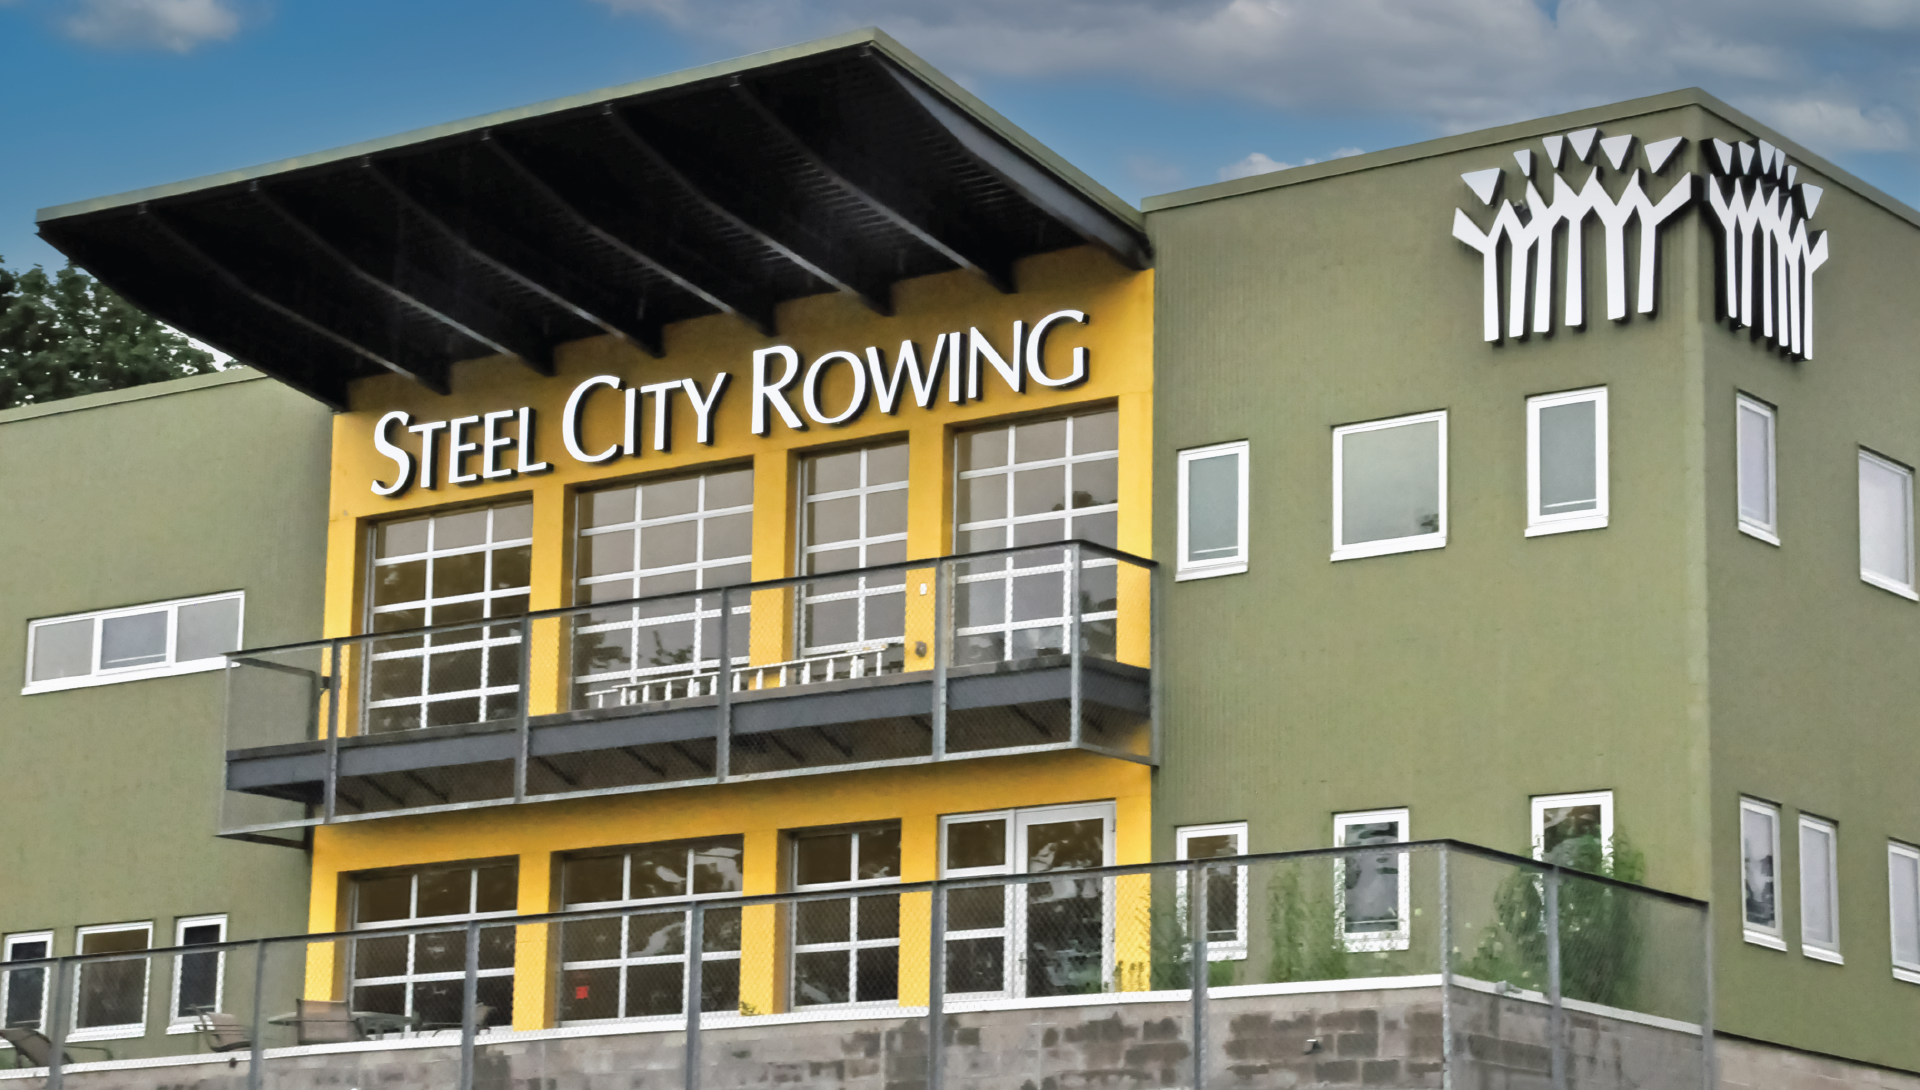 Steel City Rowing